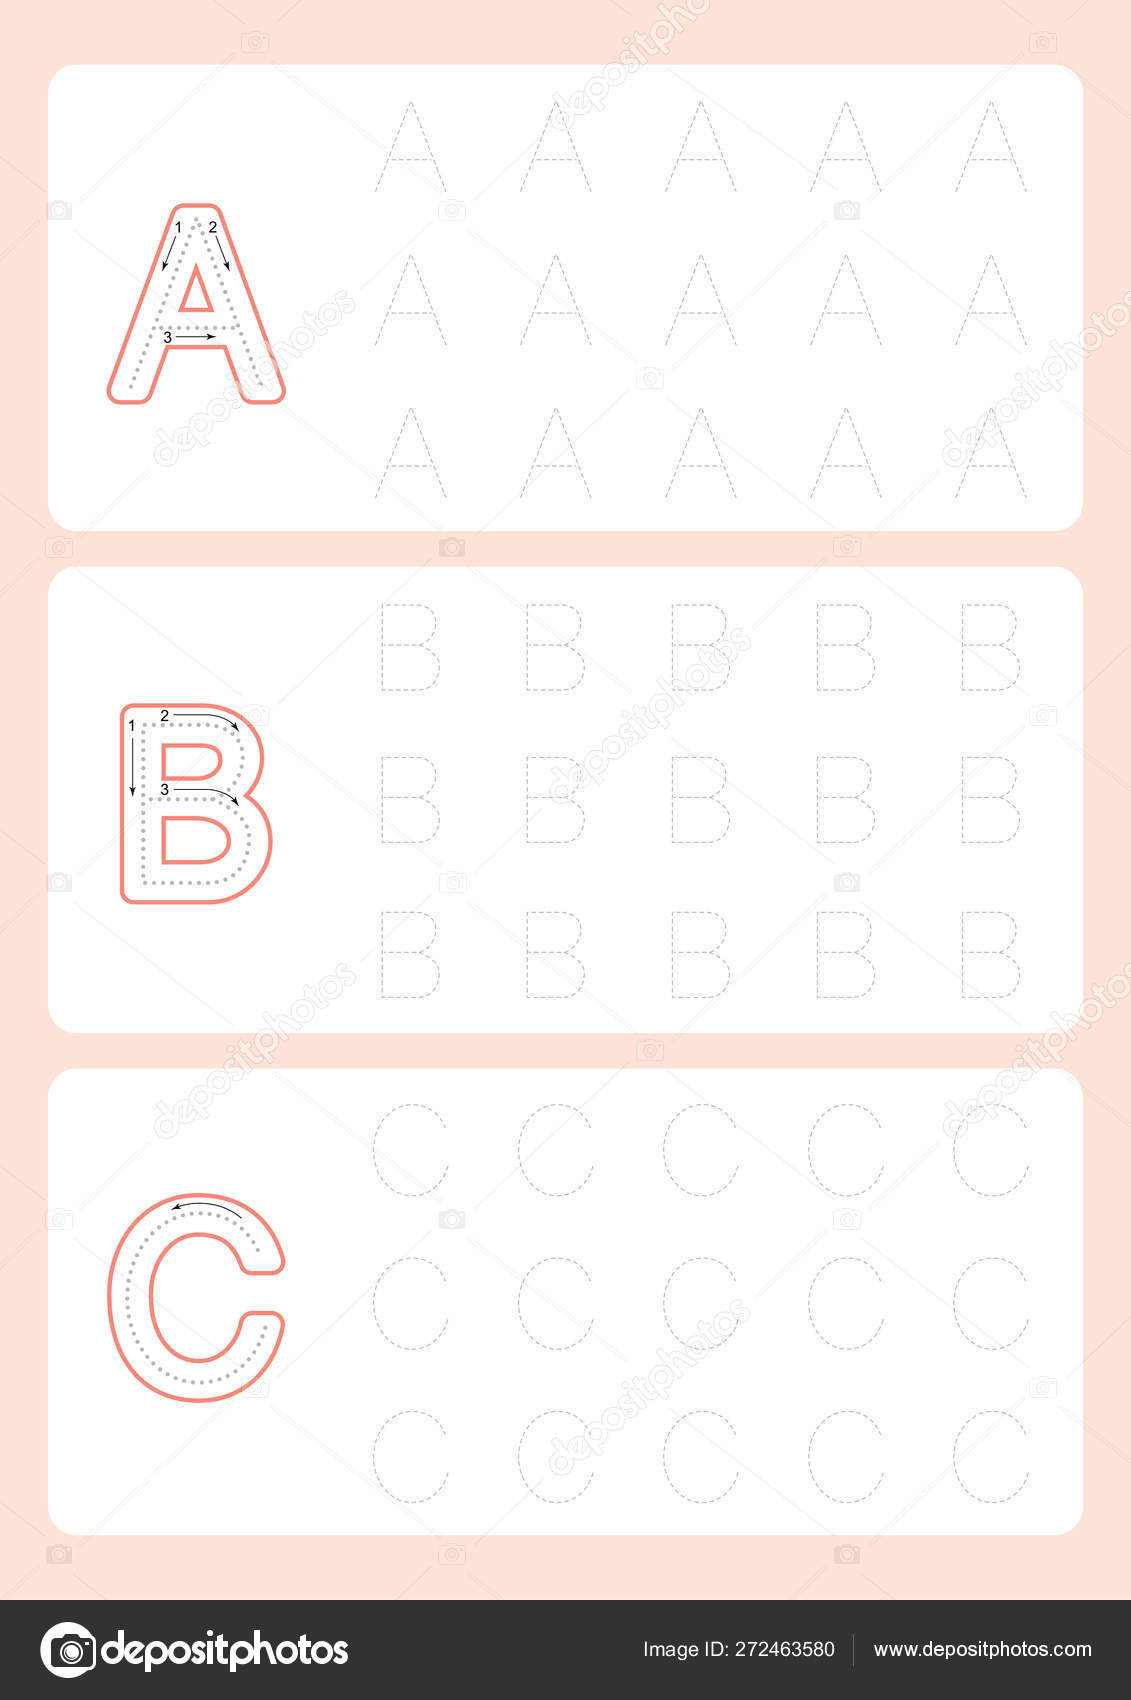 Kindergarten Tracing Letters Worksheets Alphabet Trace inside Tracing Letters For Kindergarten